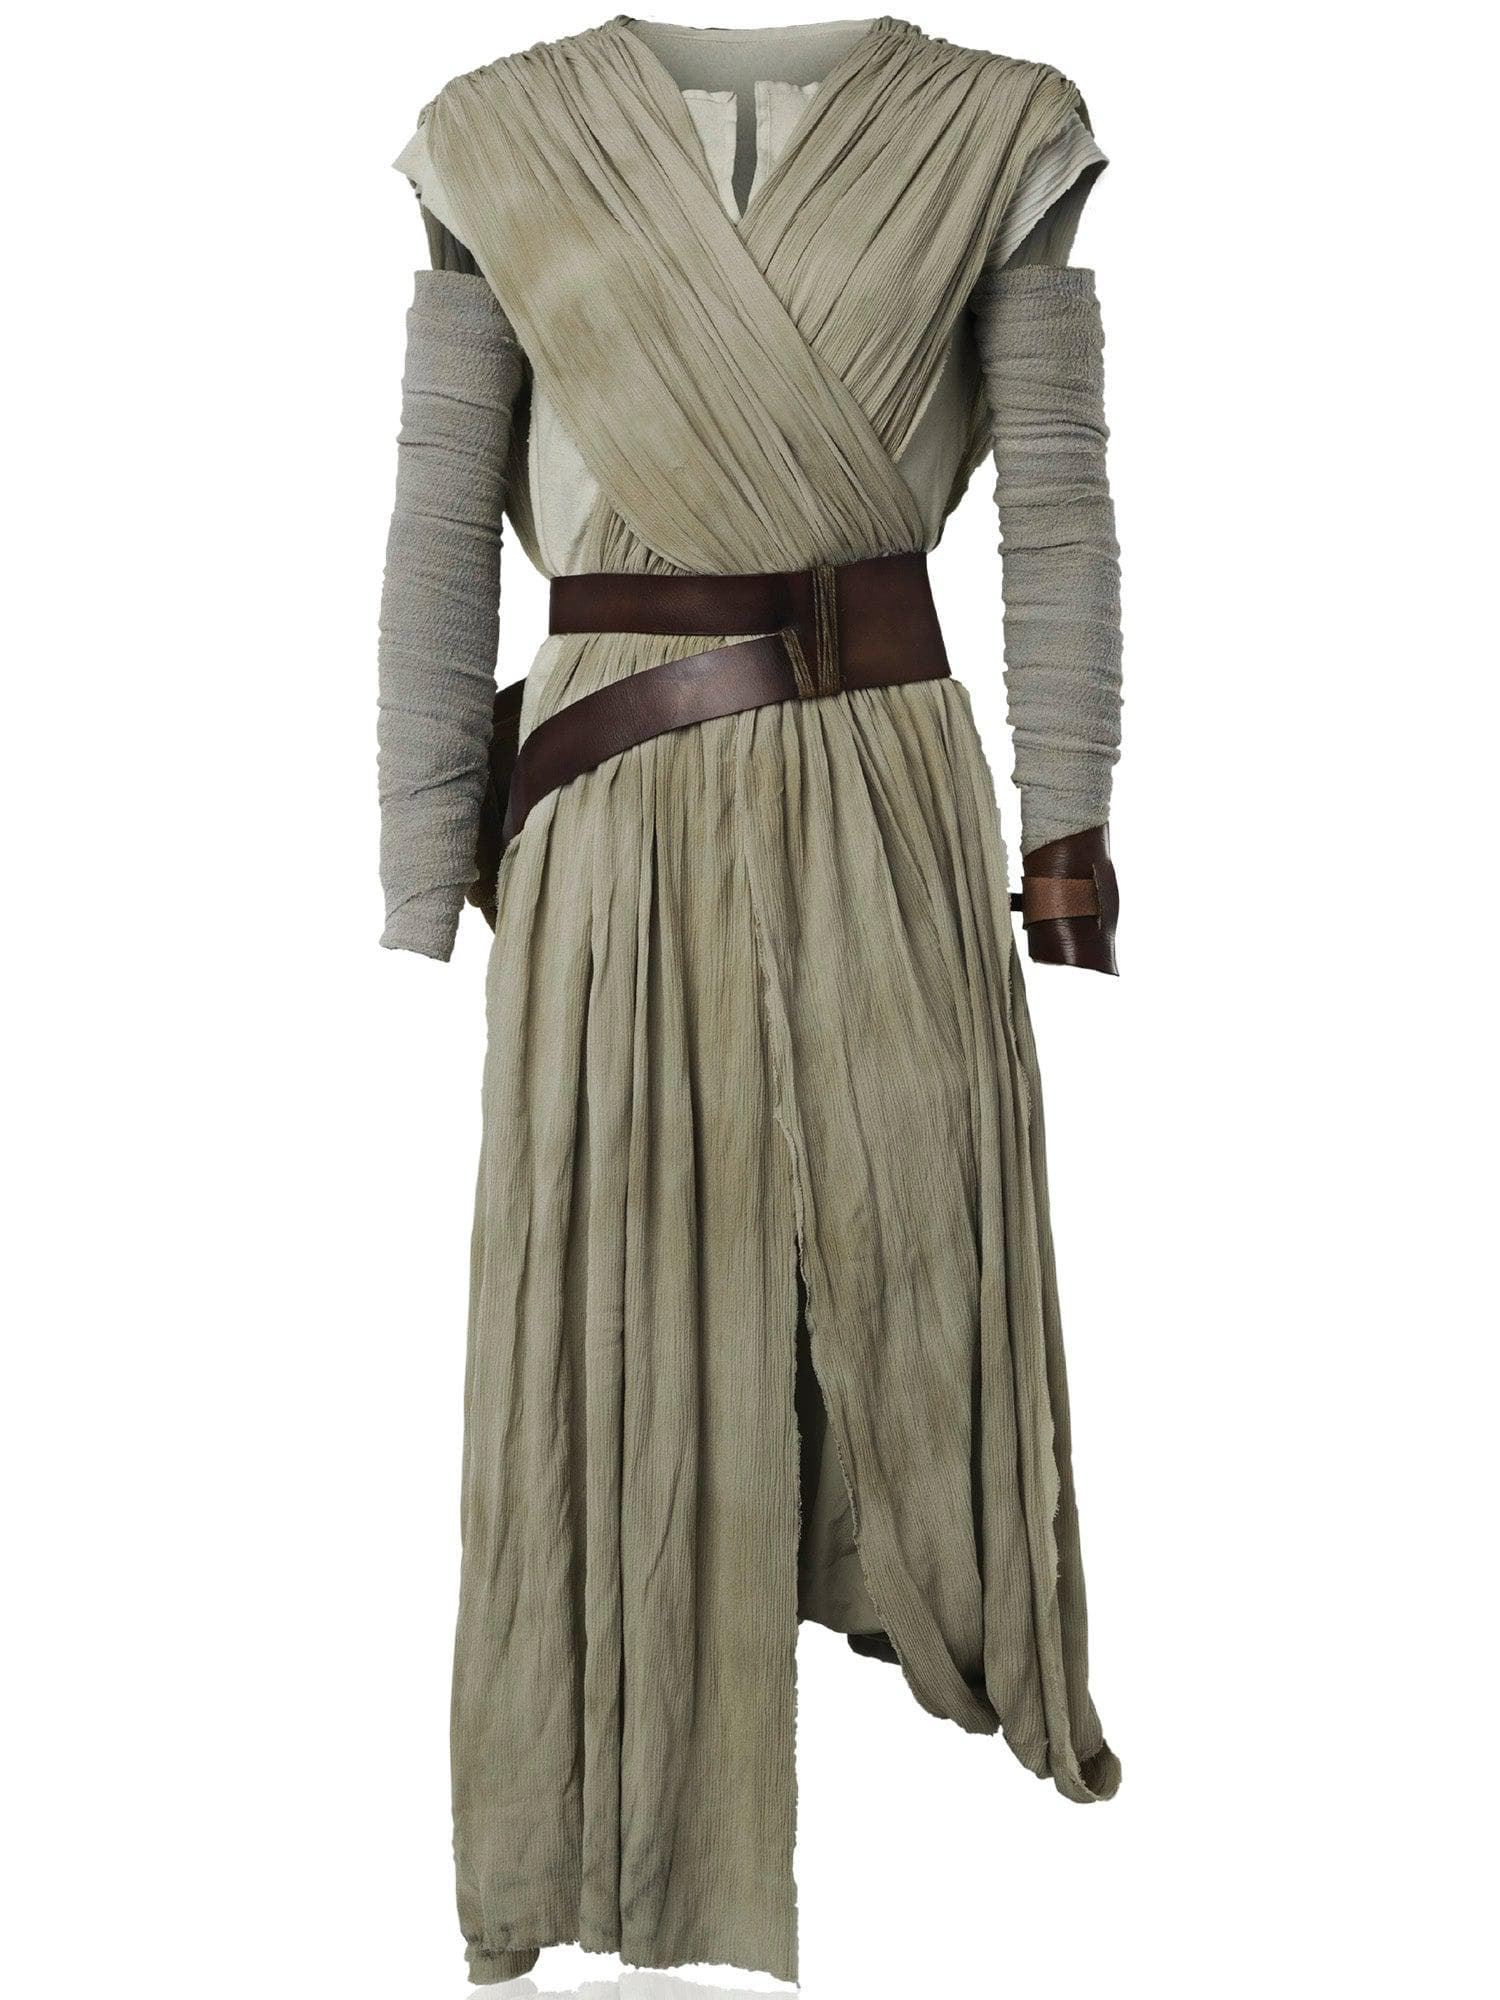 Denuo Novo Star Wars: The Force Awakens Rey Jakku Costume Ensemble - costumes.com